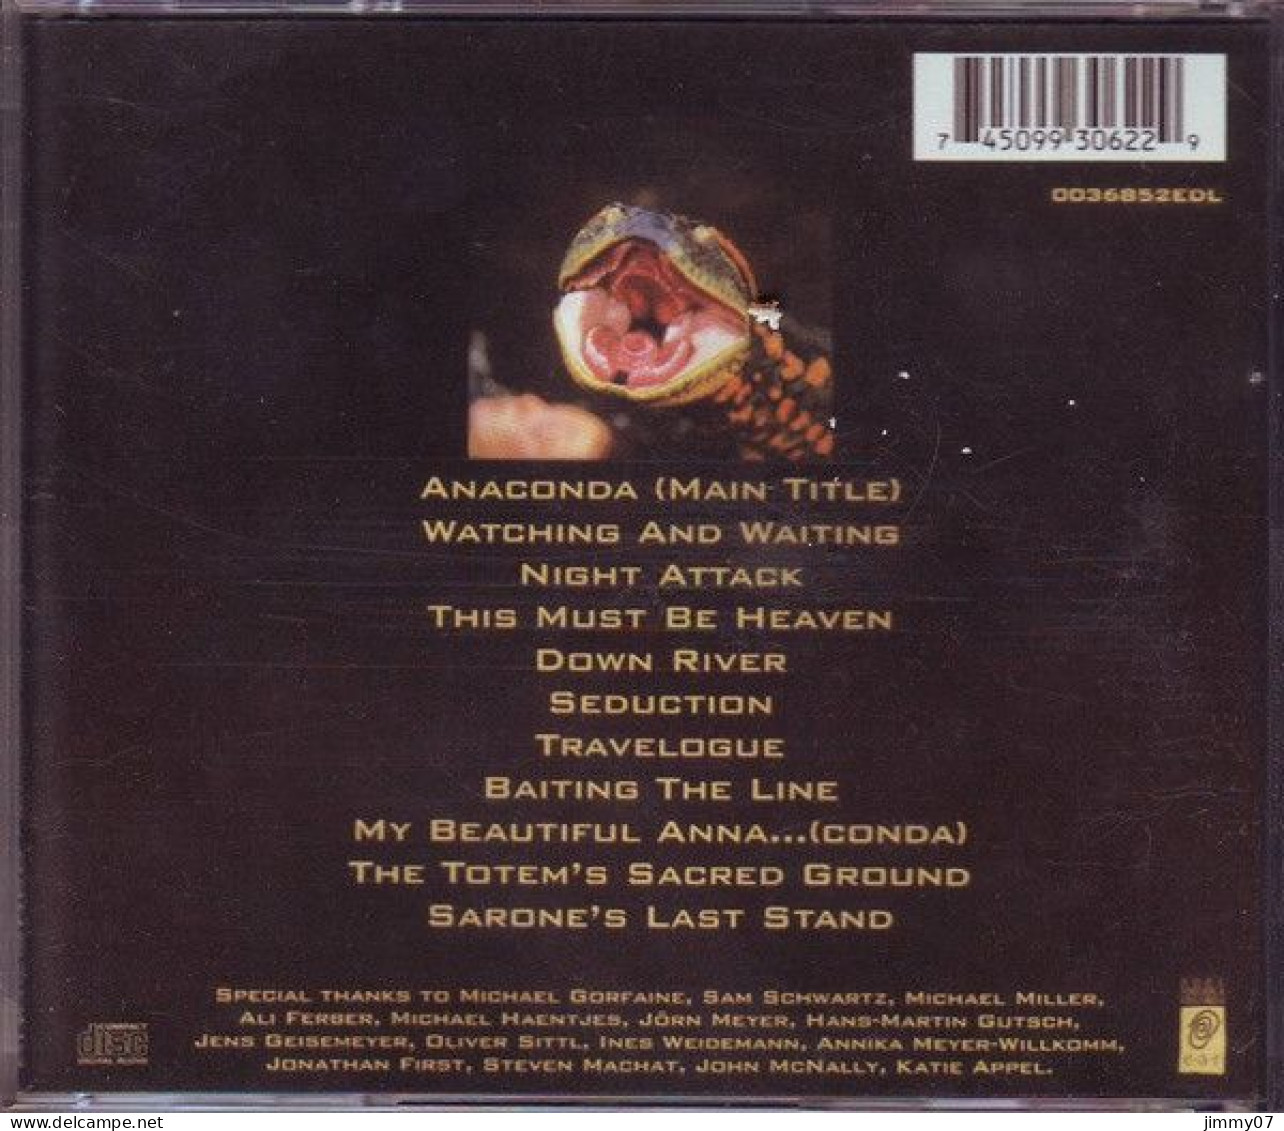 Randy Edelman - Anaconda (Original Motion Picture Soundtrack) (CD, Album) - Soundtracks, Film Music